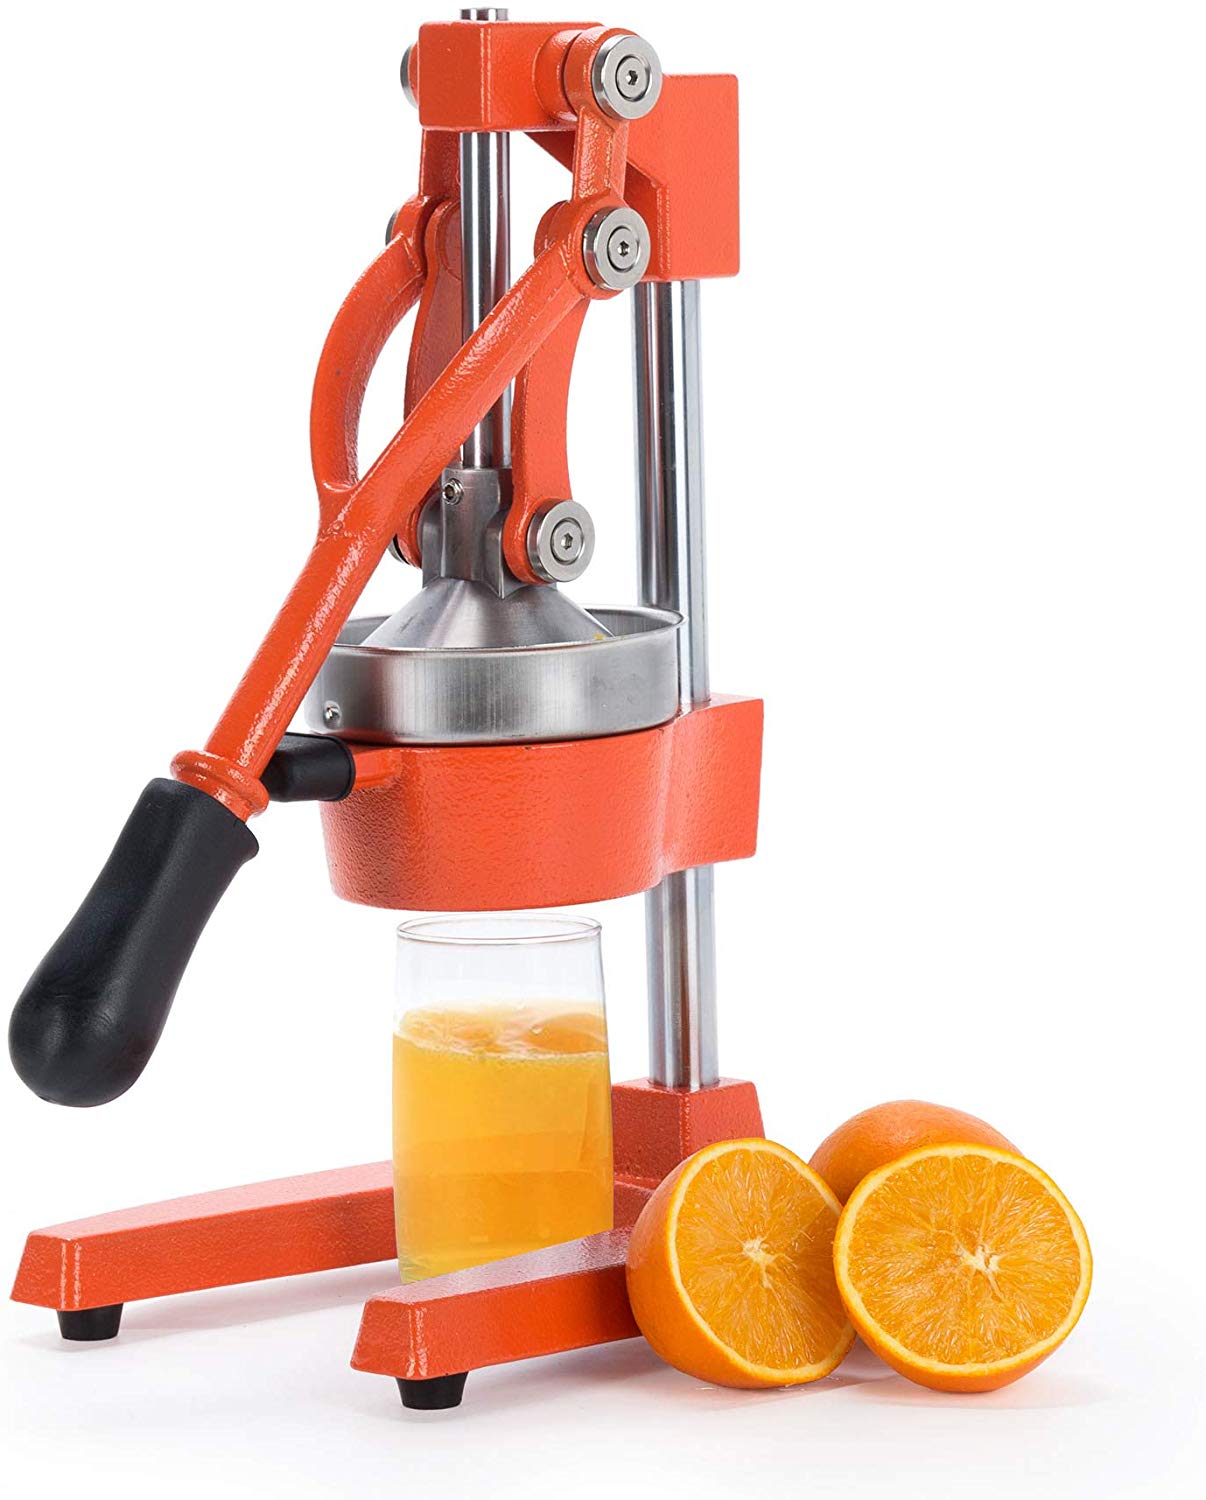 CO-Z Commercial Grade Manual Citrus Juicer